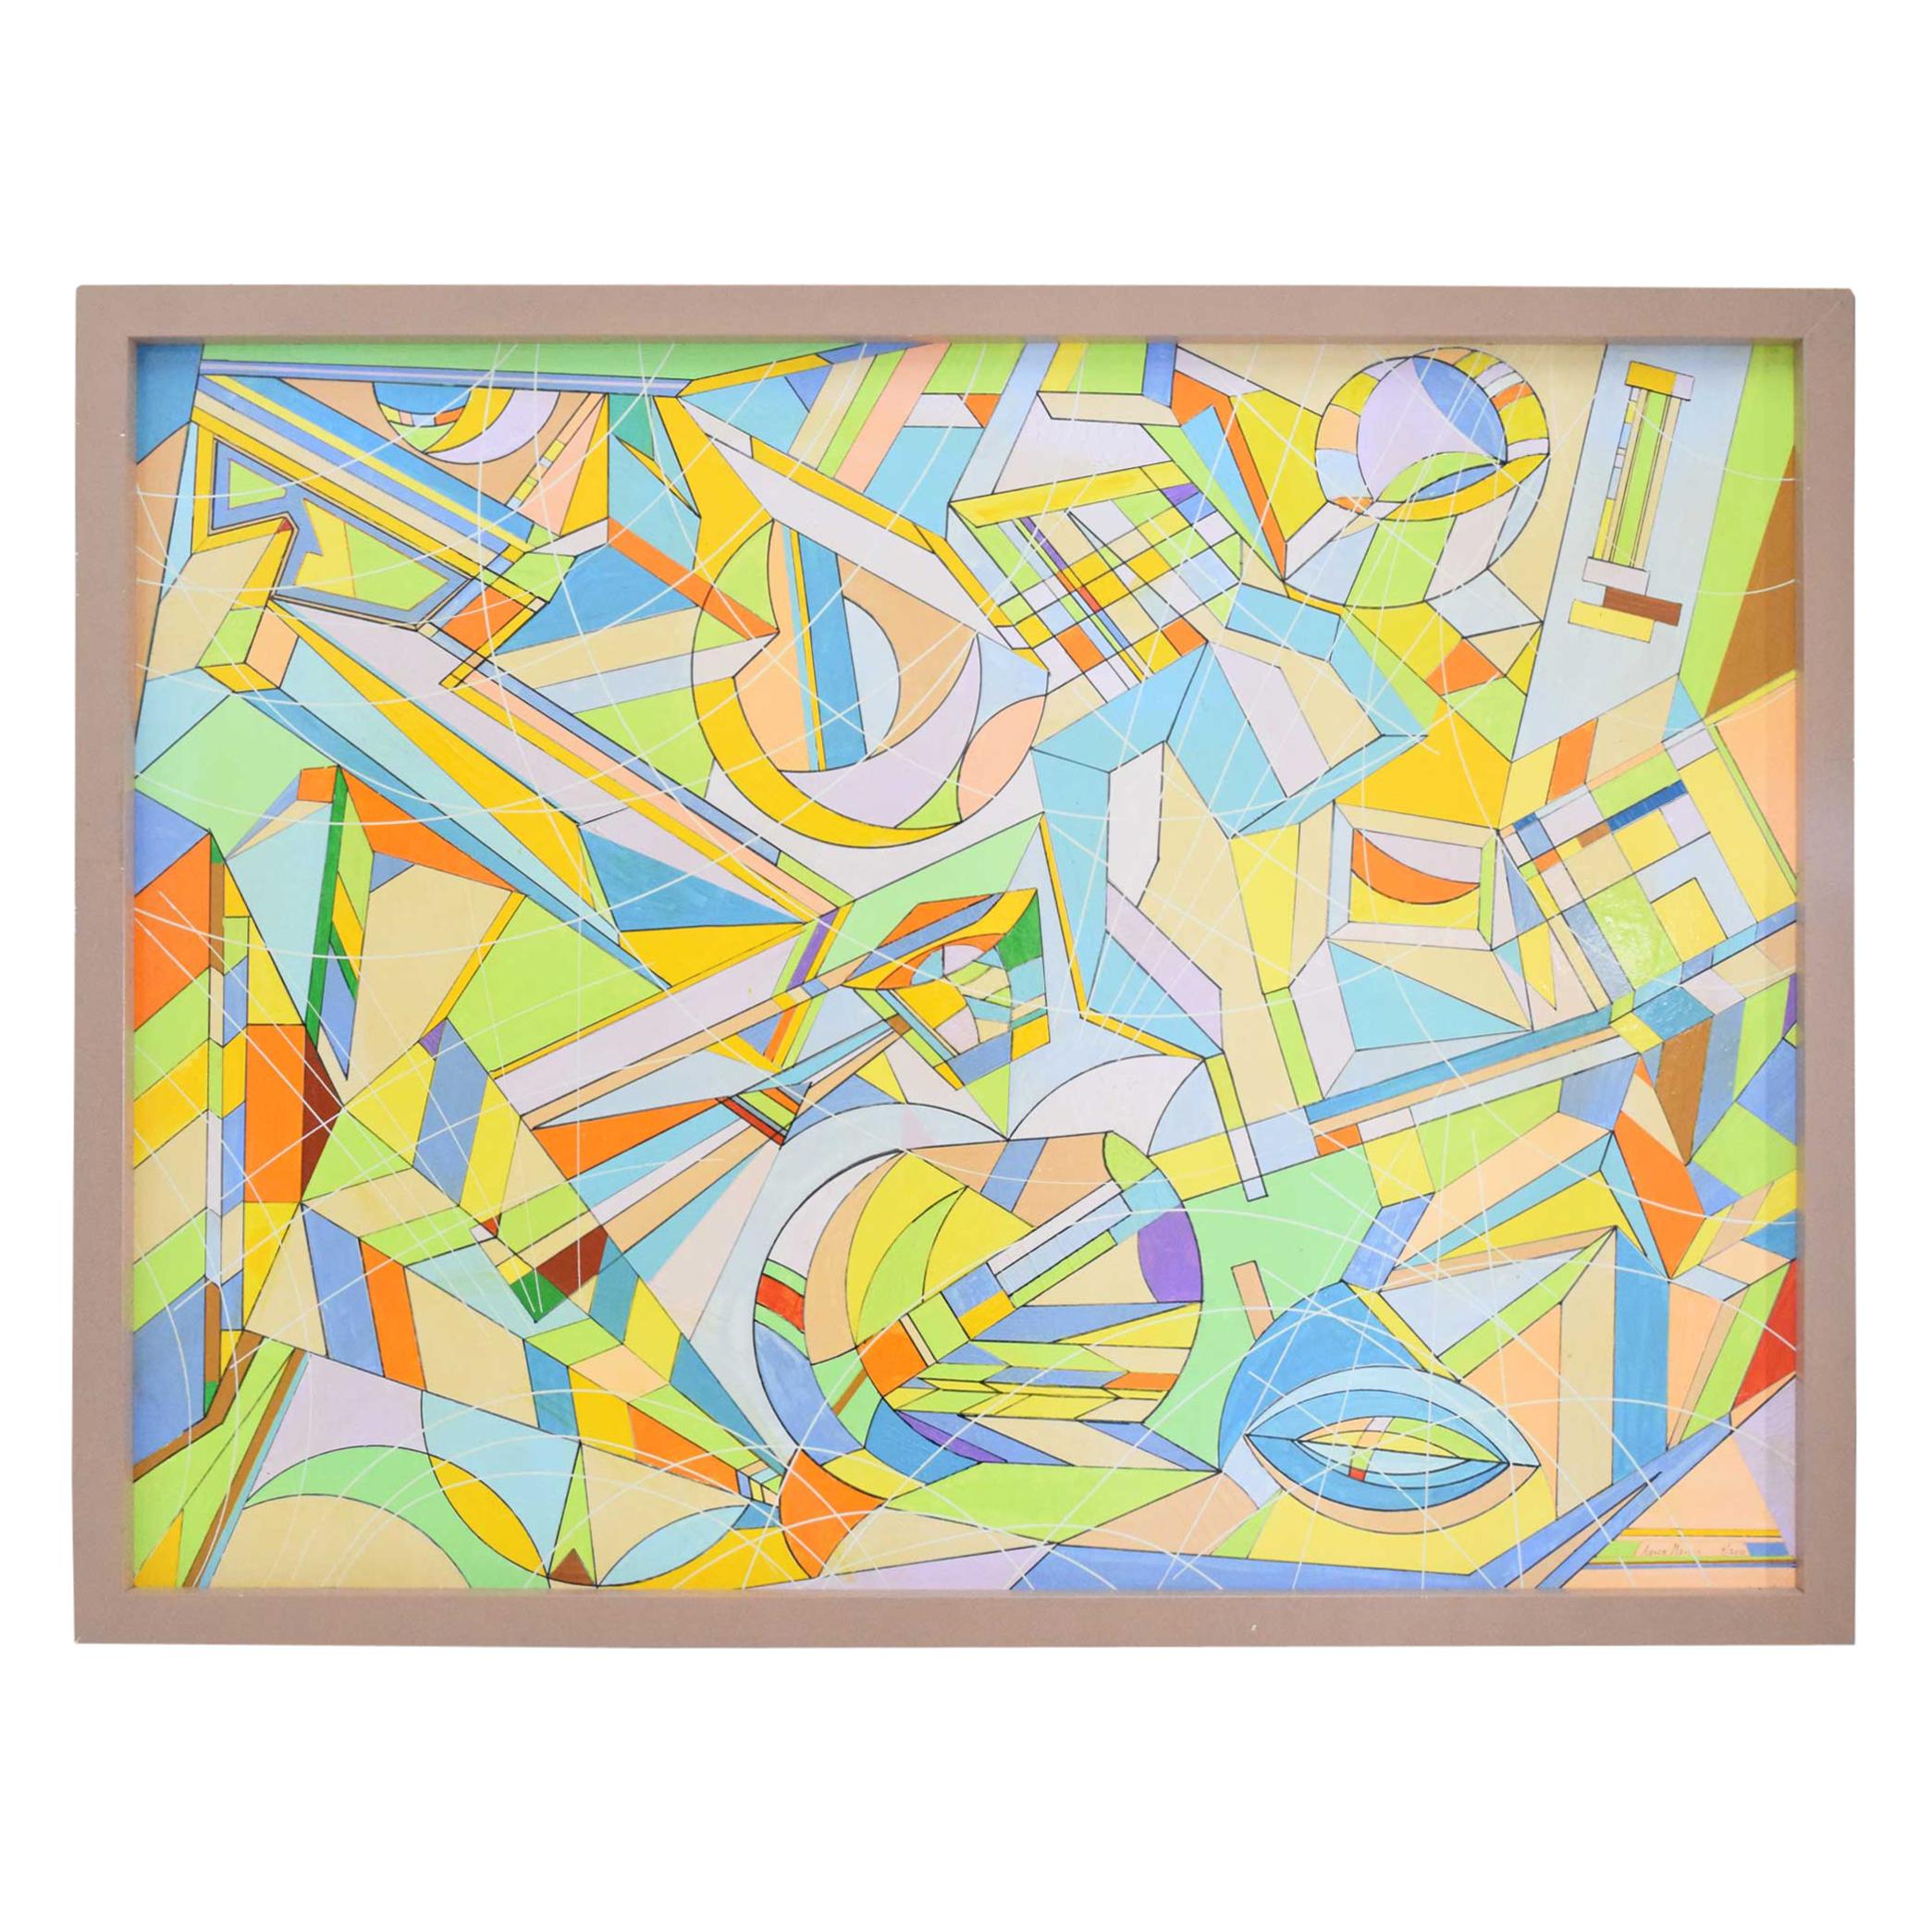 Aaron Marcus, Abstraktes geometrisches Ölgemälde auf Leinwand, datiert 2010